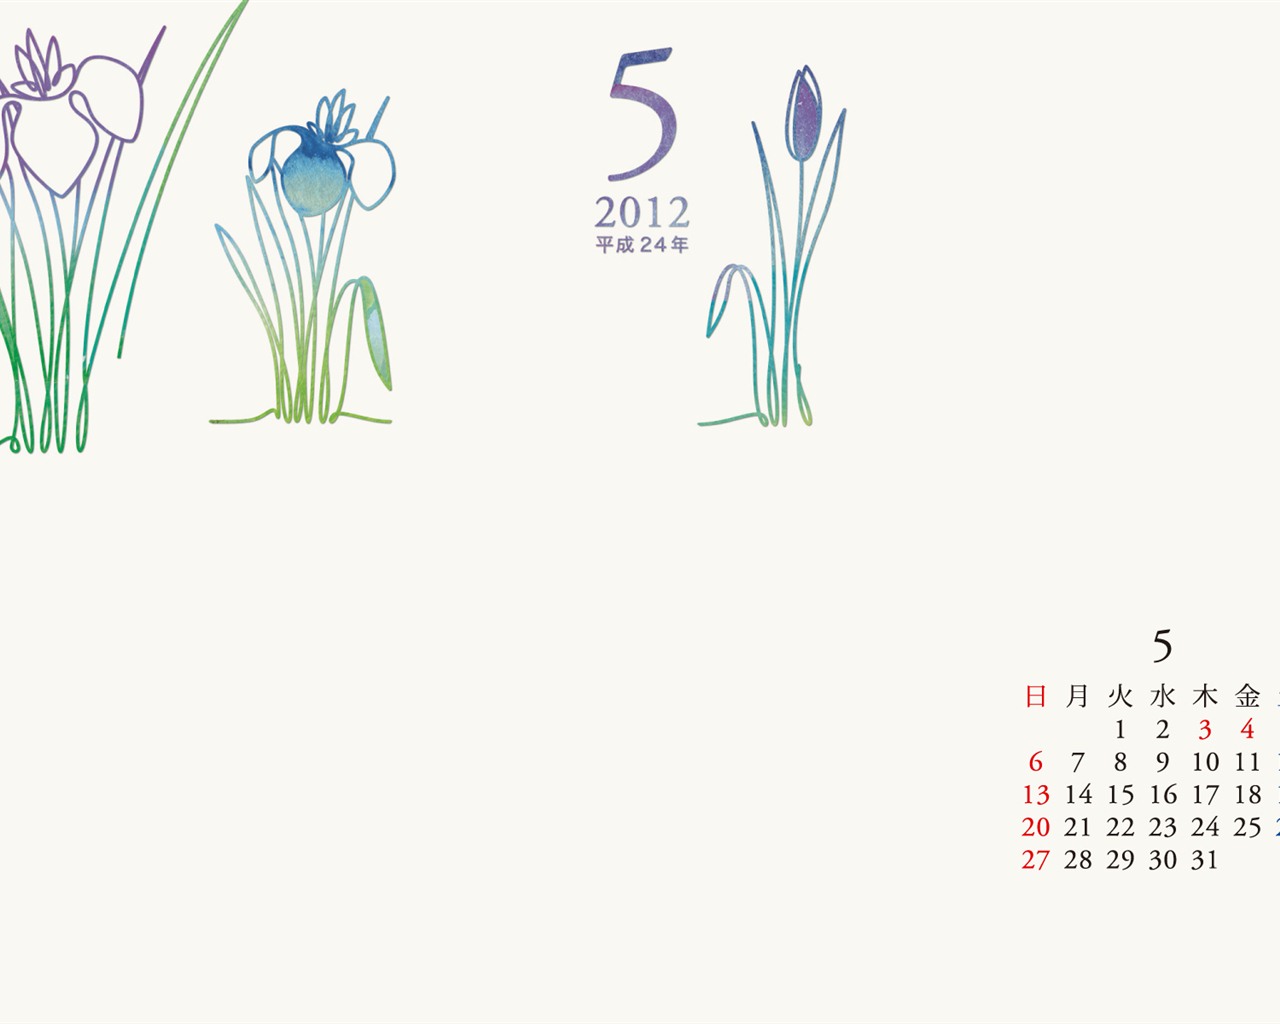 May 2012 Calendar wallpapers (1) #8 - 1280x1024